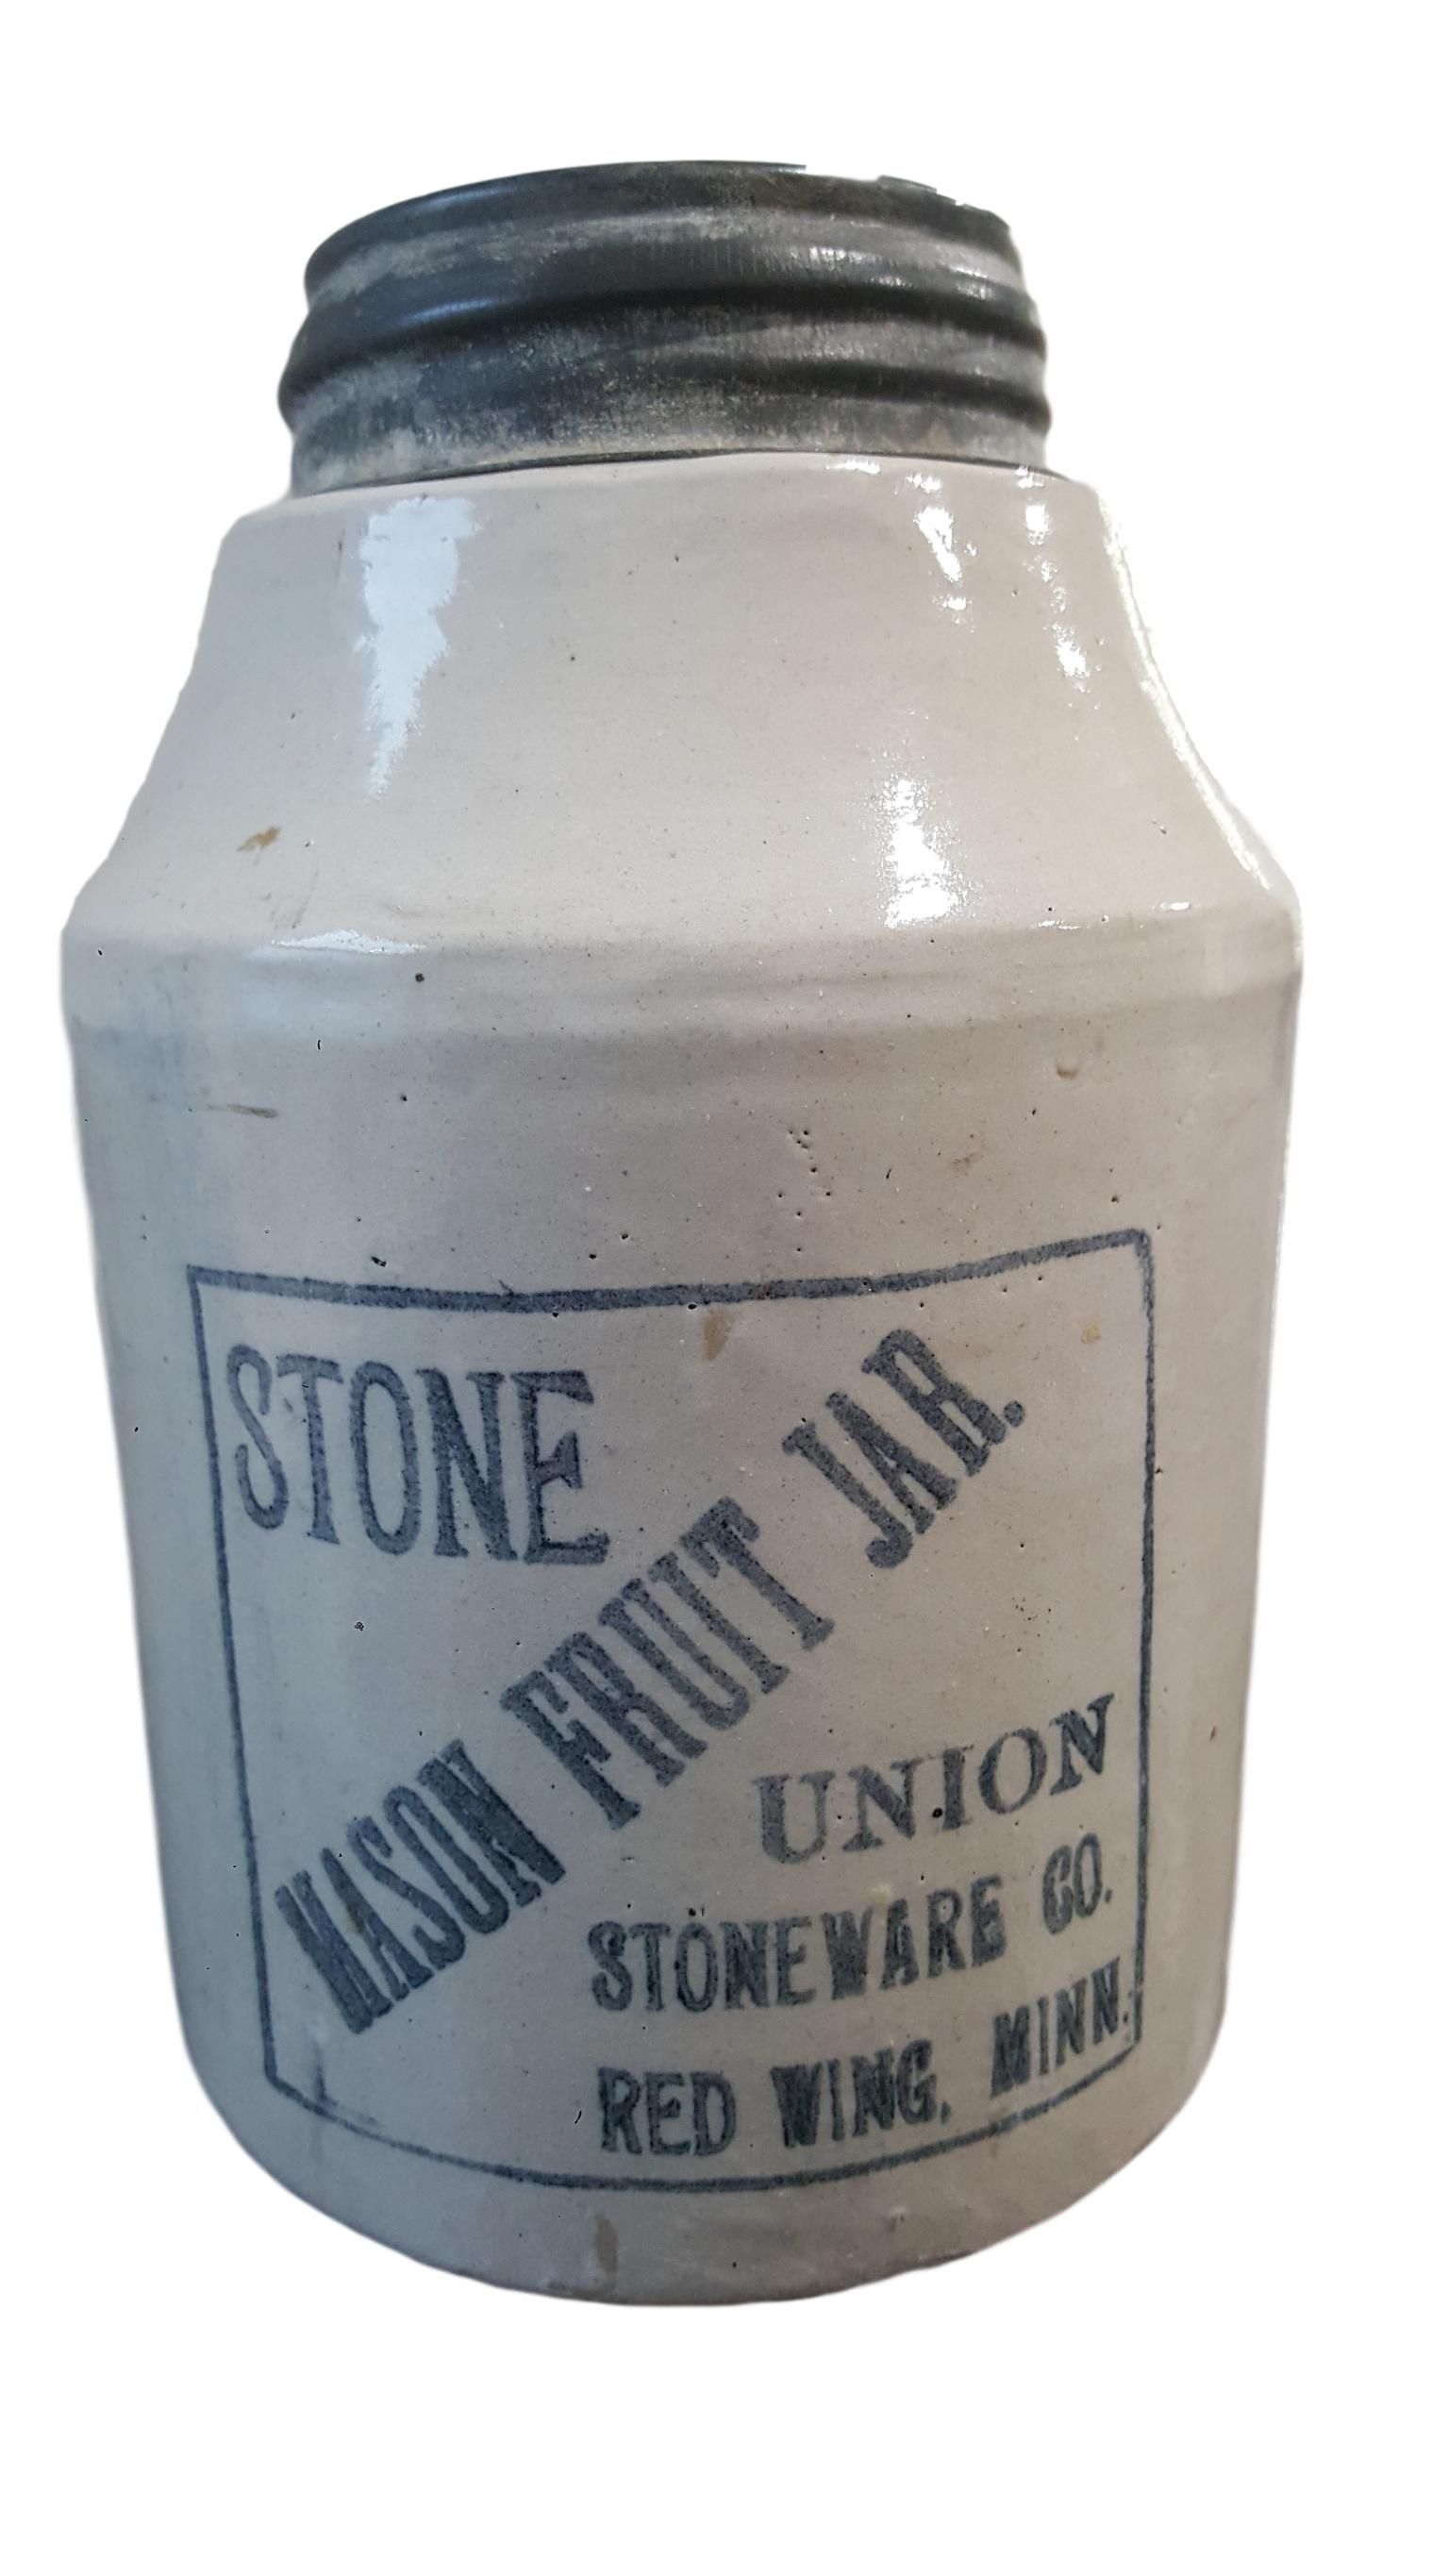 Union Stoneware Co. Red Wing. Minn. Stone Mason Jar with Zinc Lid Pat. Jan. 1899 Antique